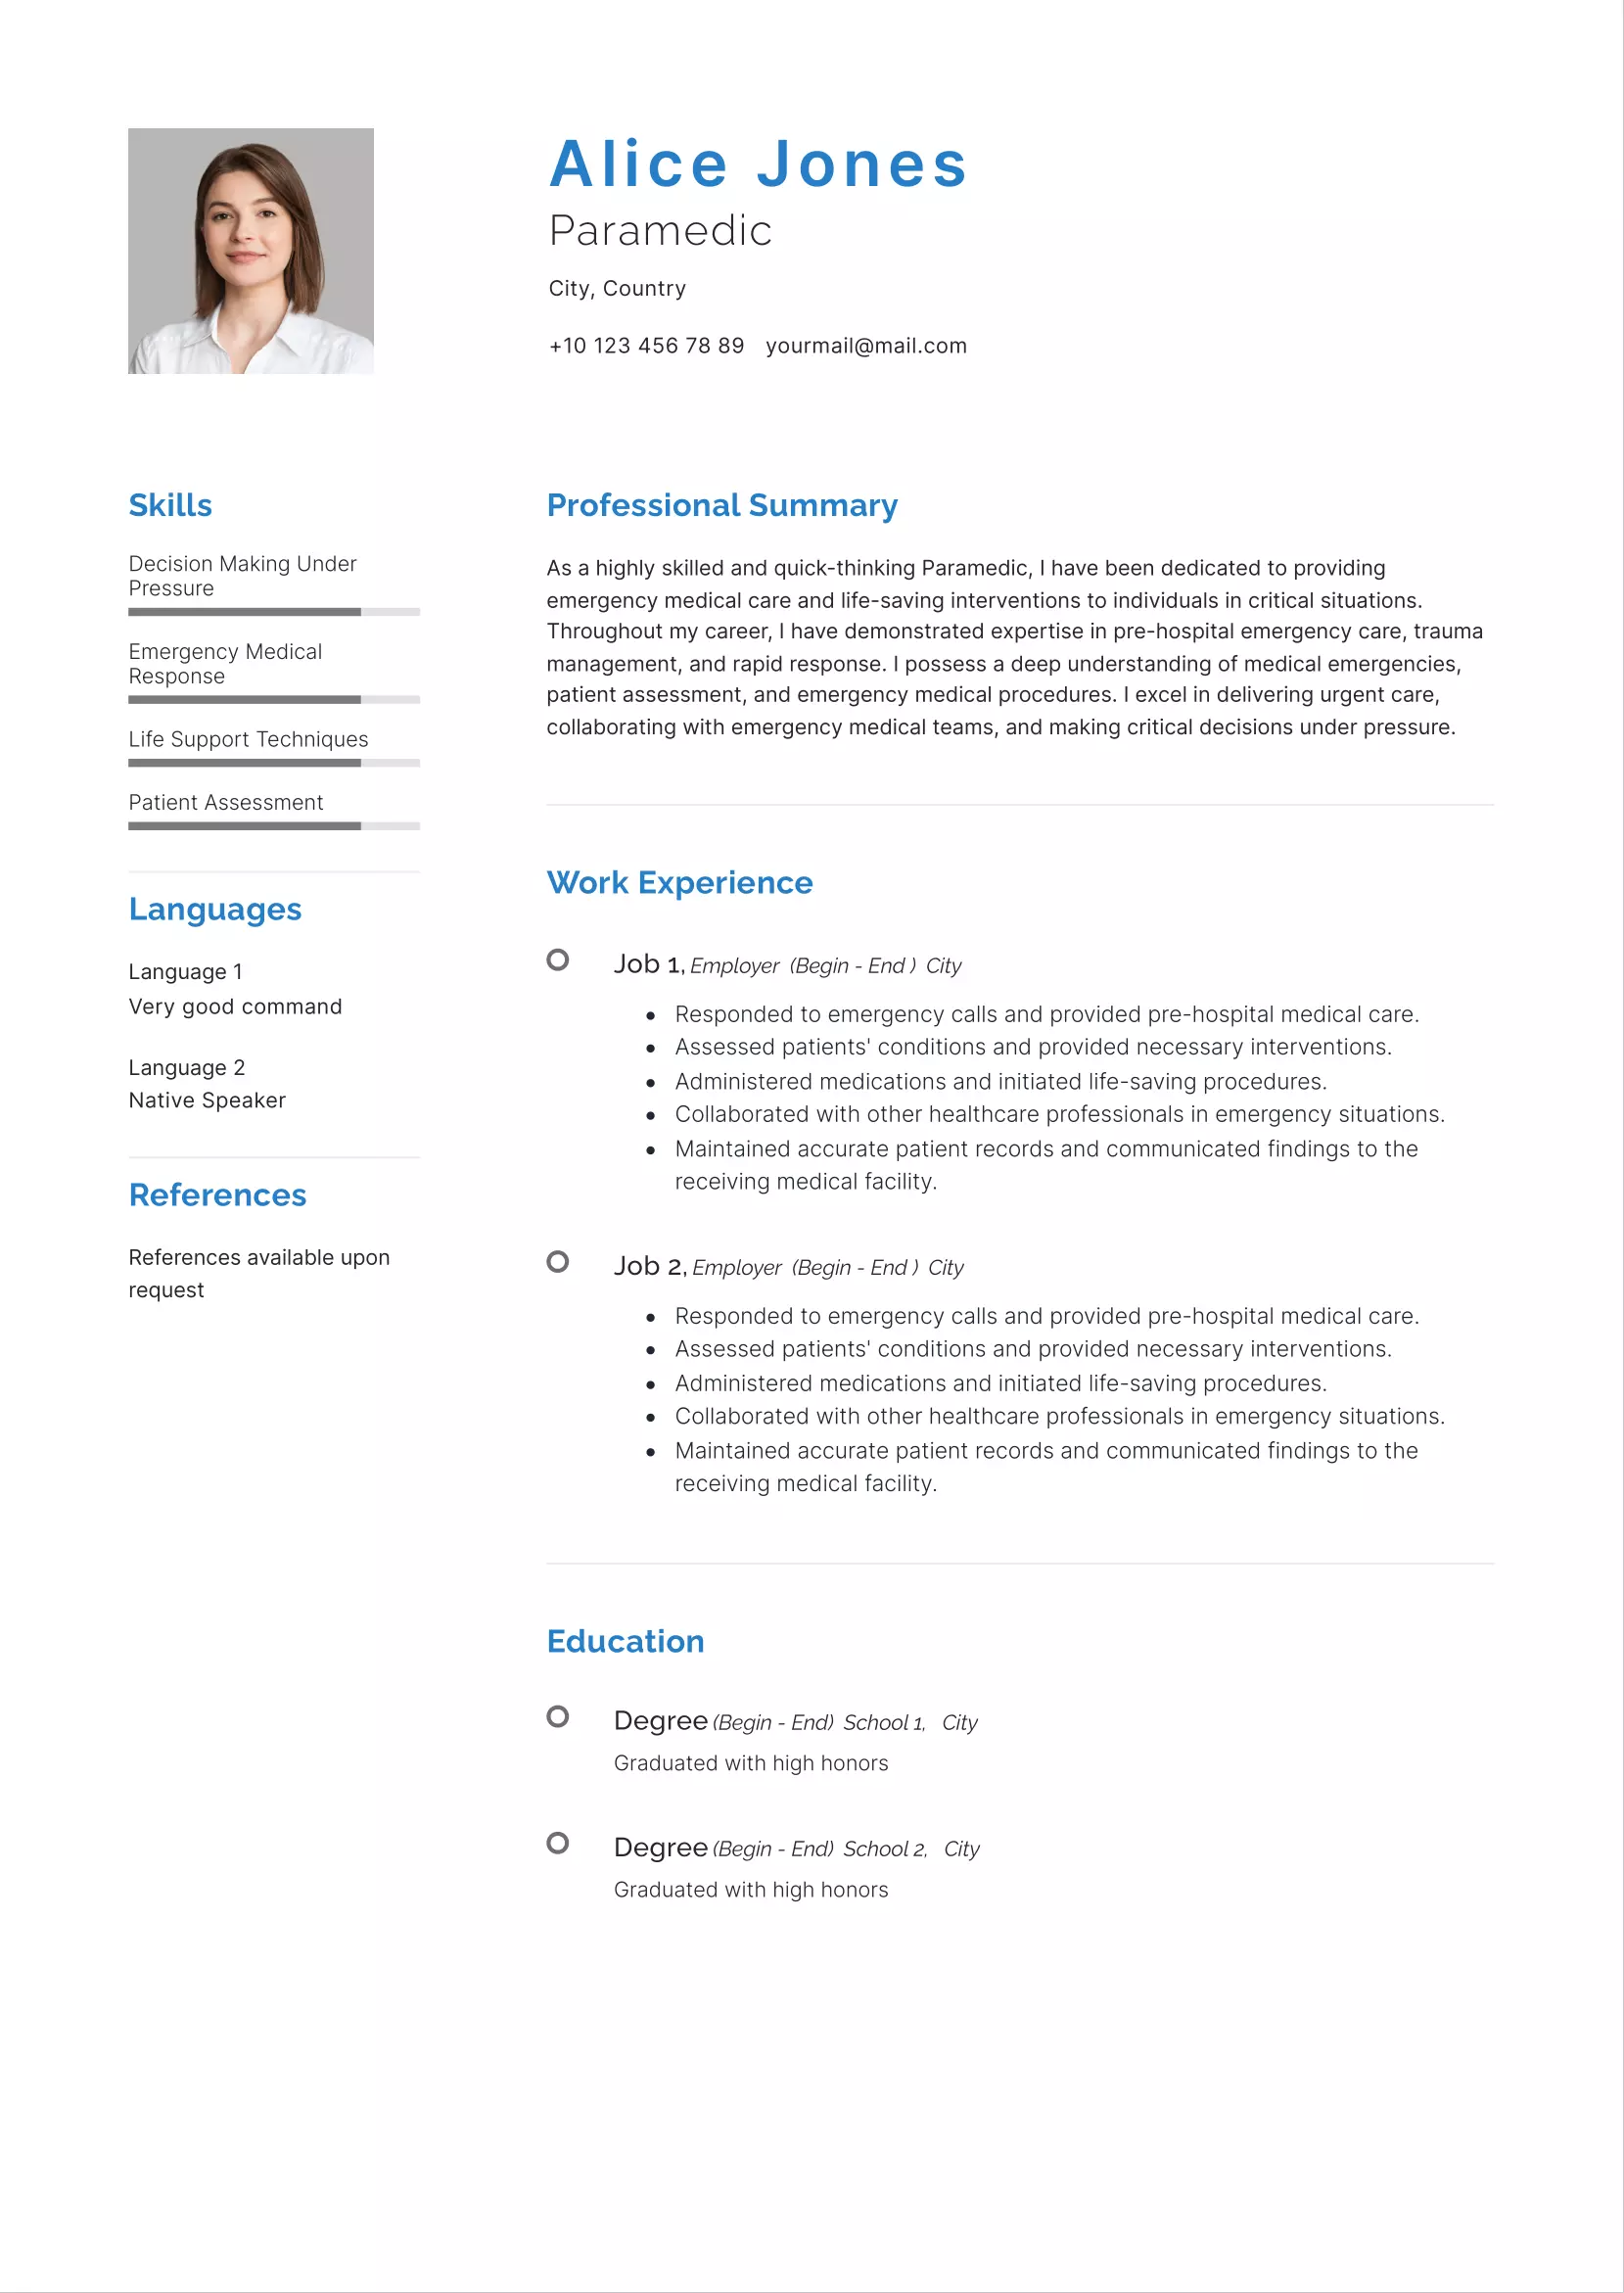 Paramedic resume example CV